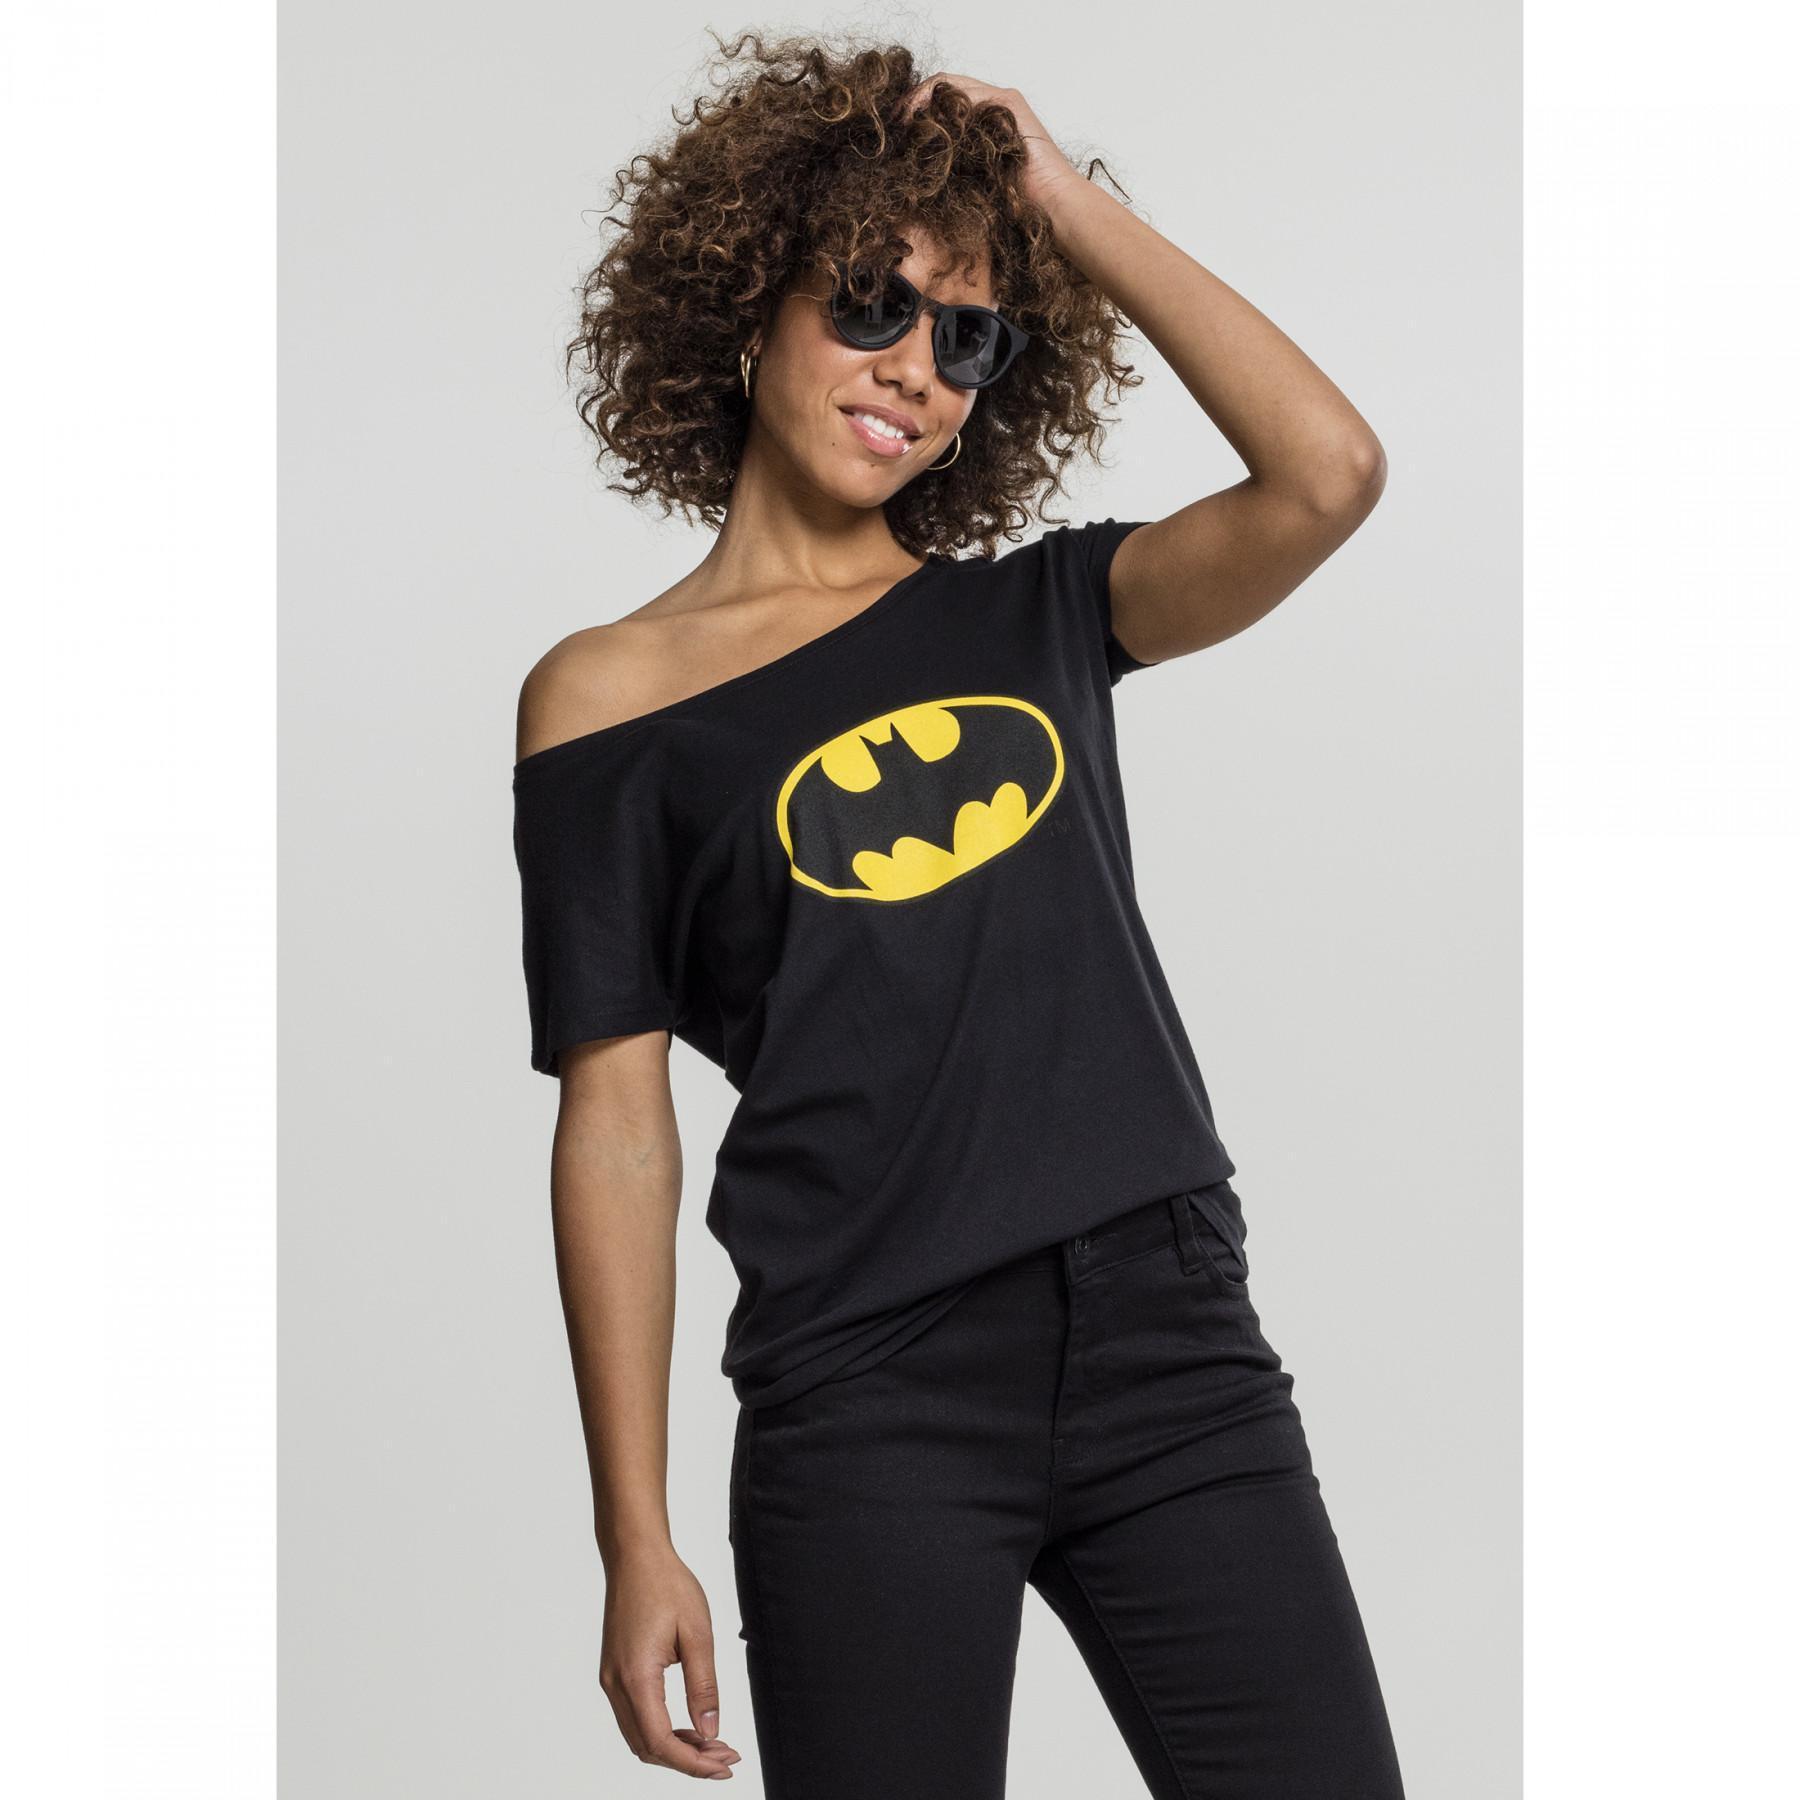 T-shirt woman Urban Classic batman logo